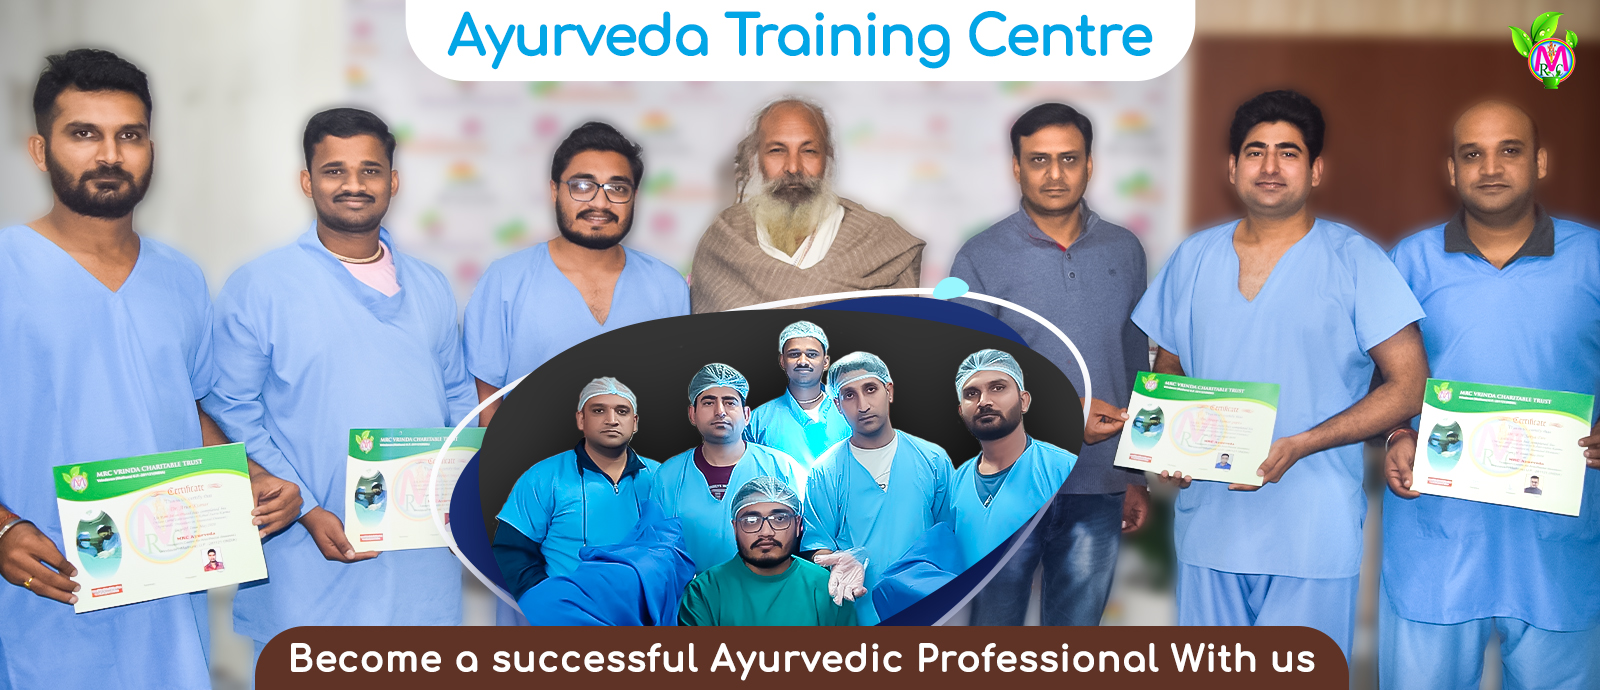 Ayurveda Training Centre 03